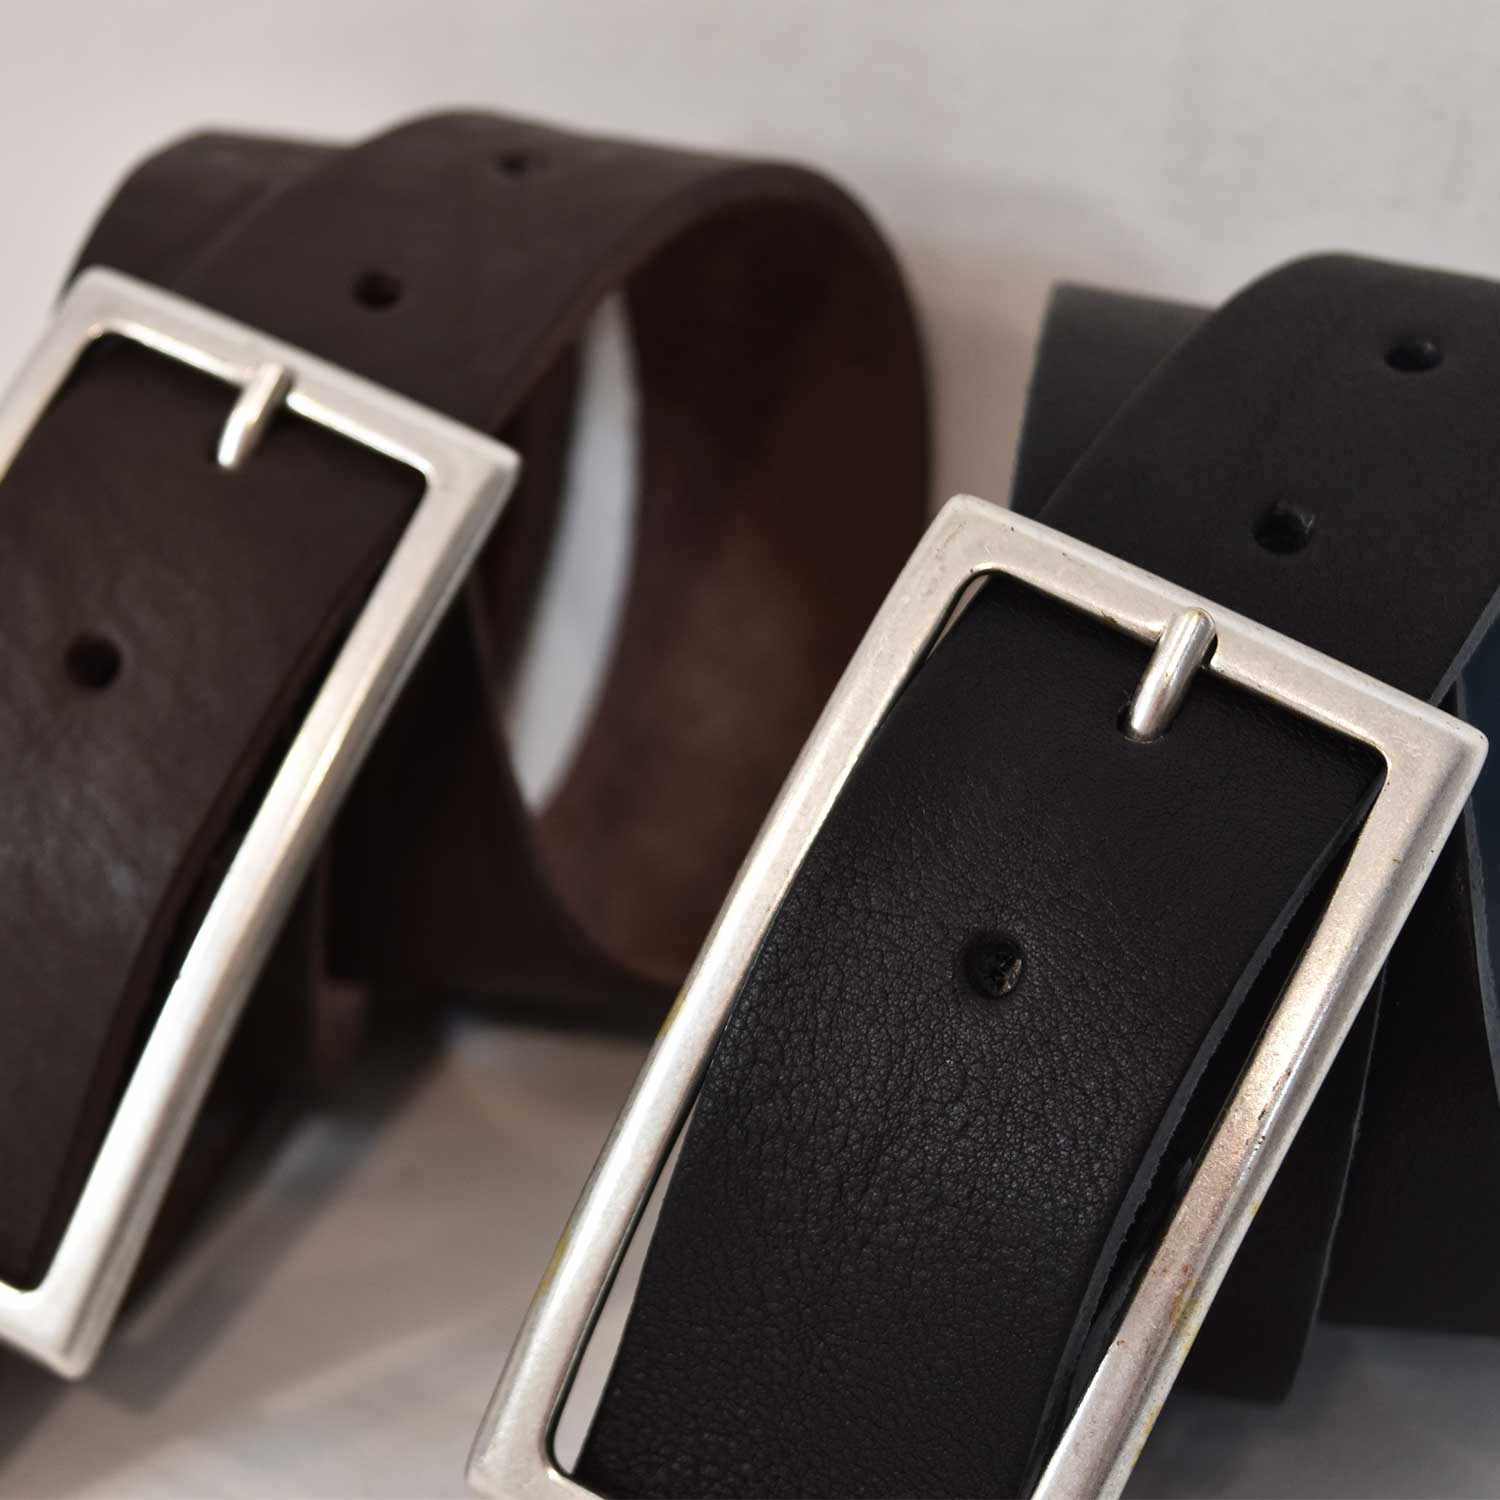 Black rectangular buckle belt 